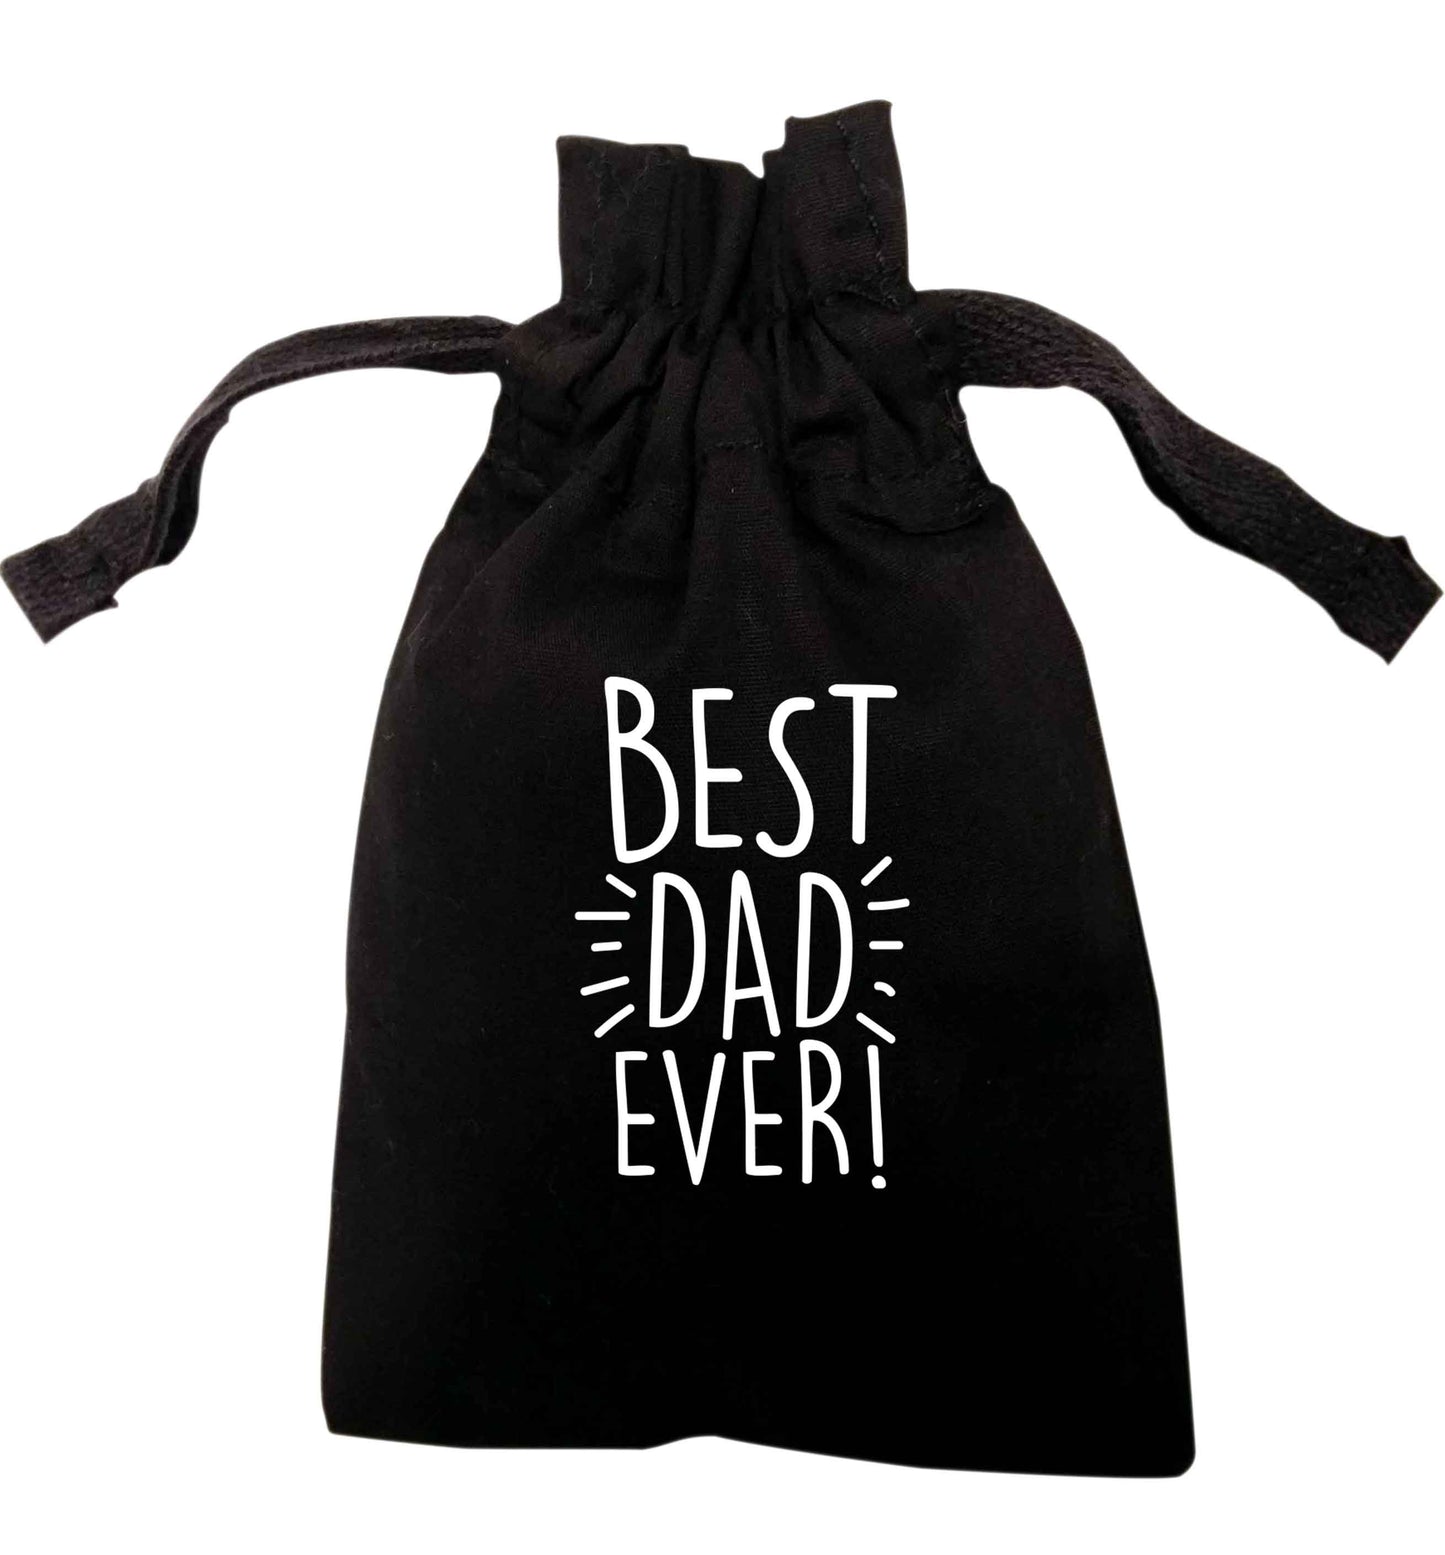 Best dad ever! | XS - L | Pouch / Drawstring bag / Sack | Organic Cotton | Bulk discounts available!